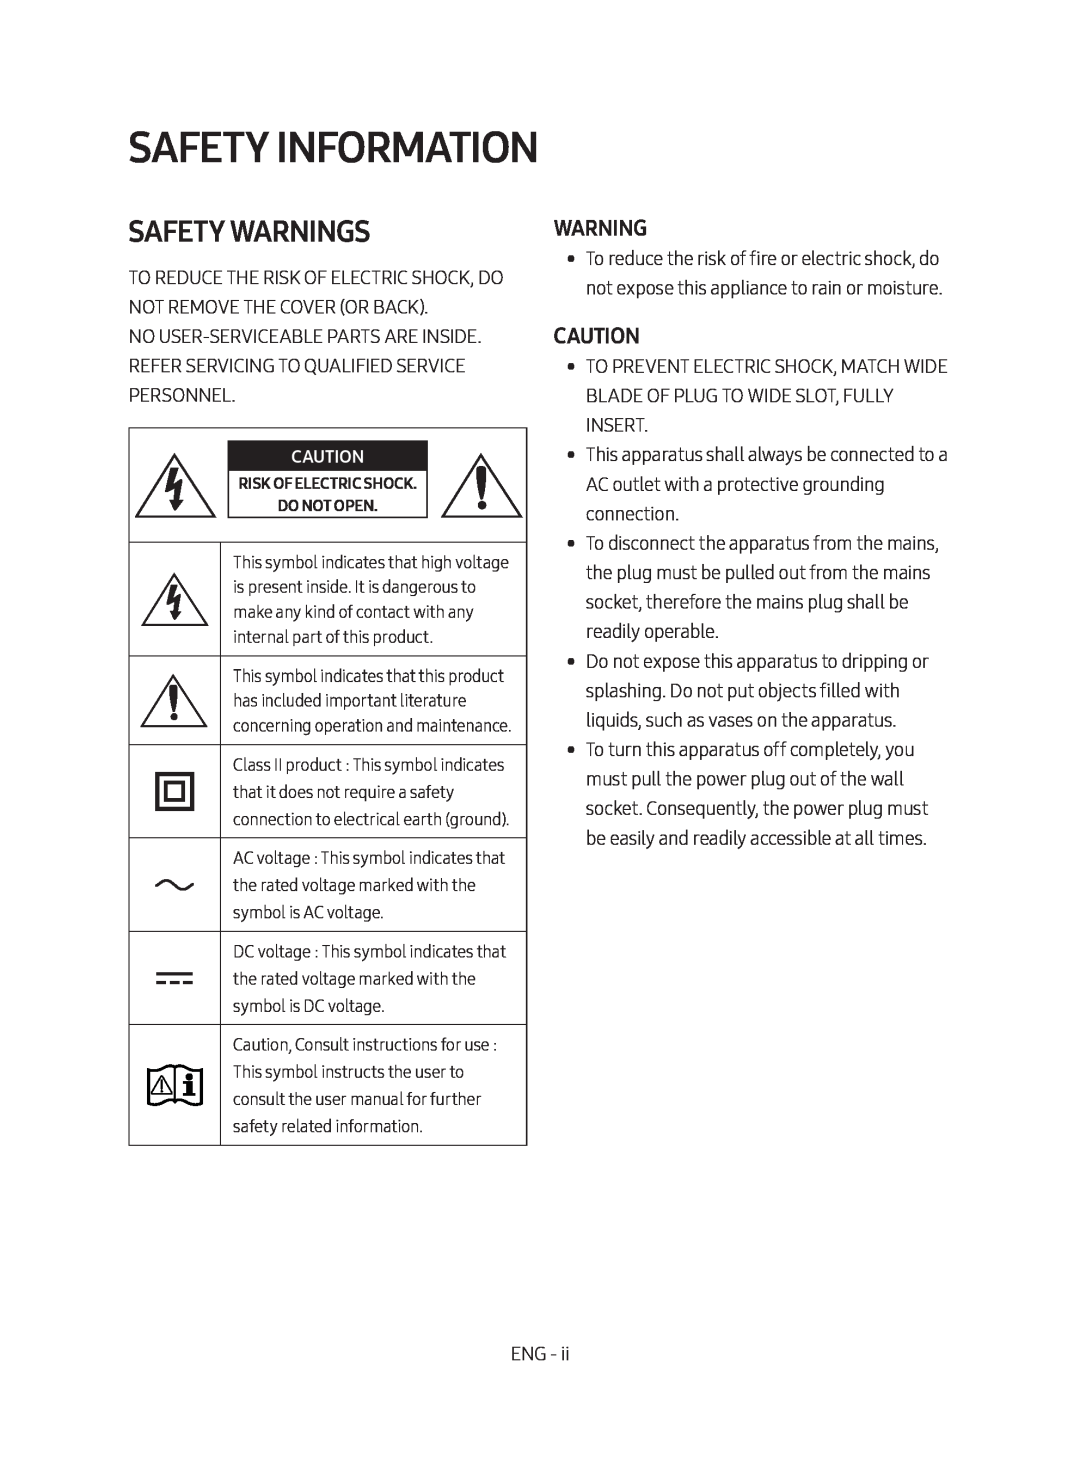 Samsung HW-M450/ZF, HW-M450/EN, HW-M450/ZG manual Safety Information, Safety Warnings 